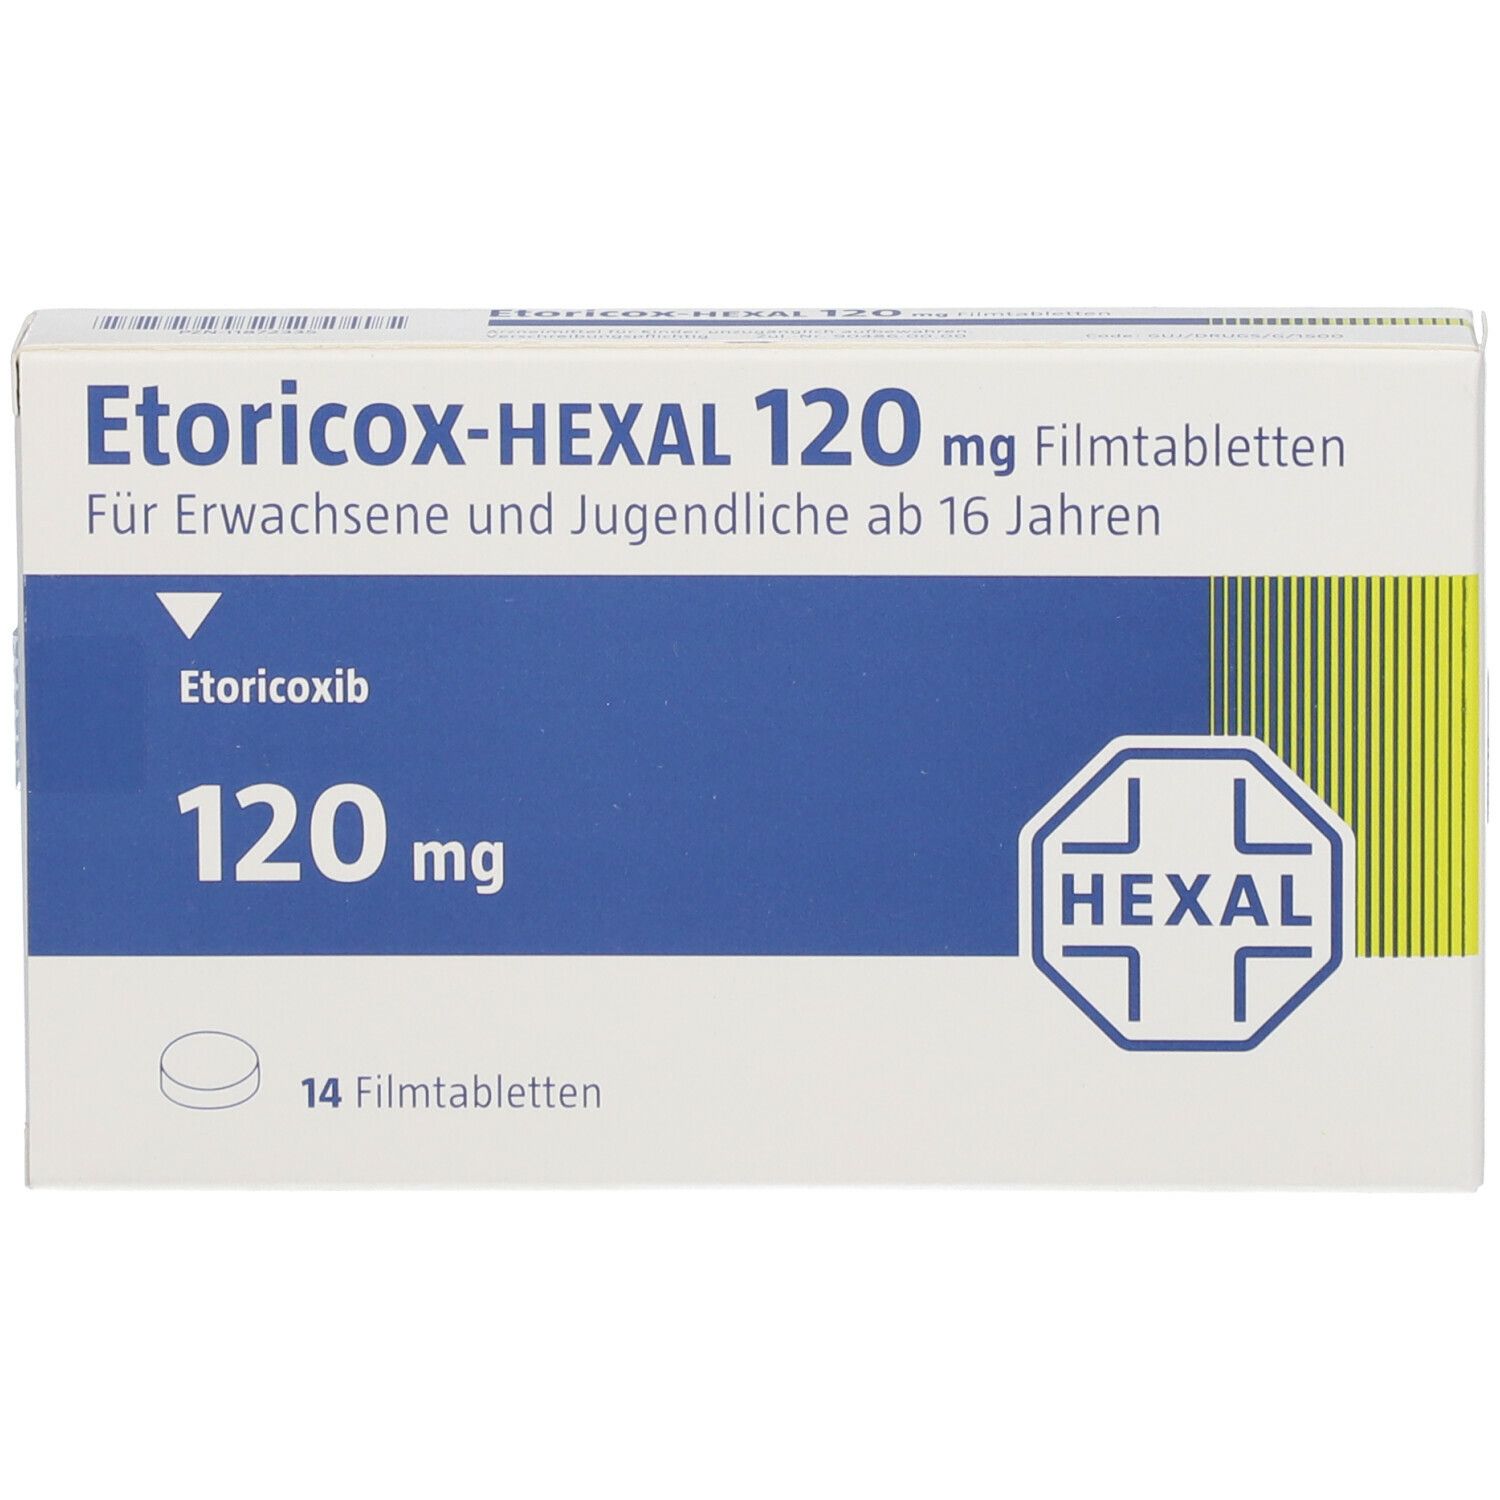 Etoricox-HEXAL 120 mg